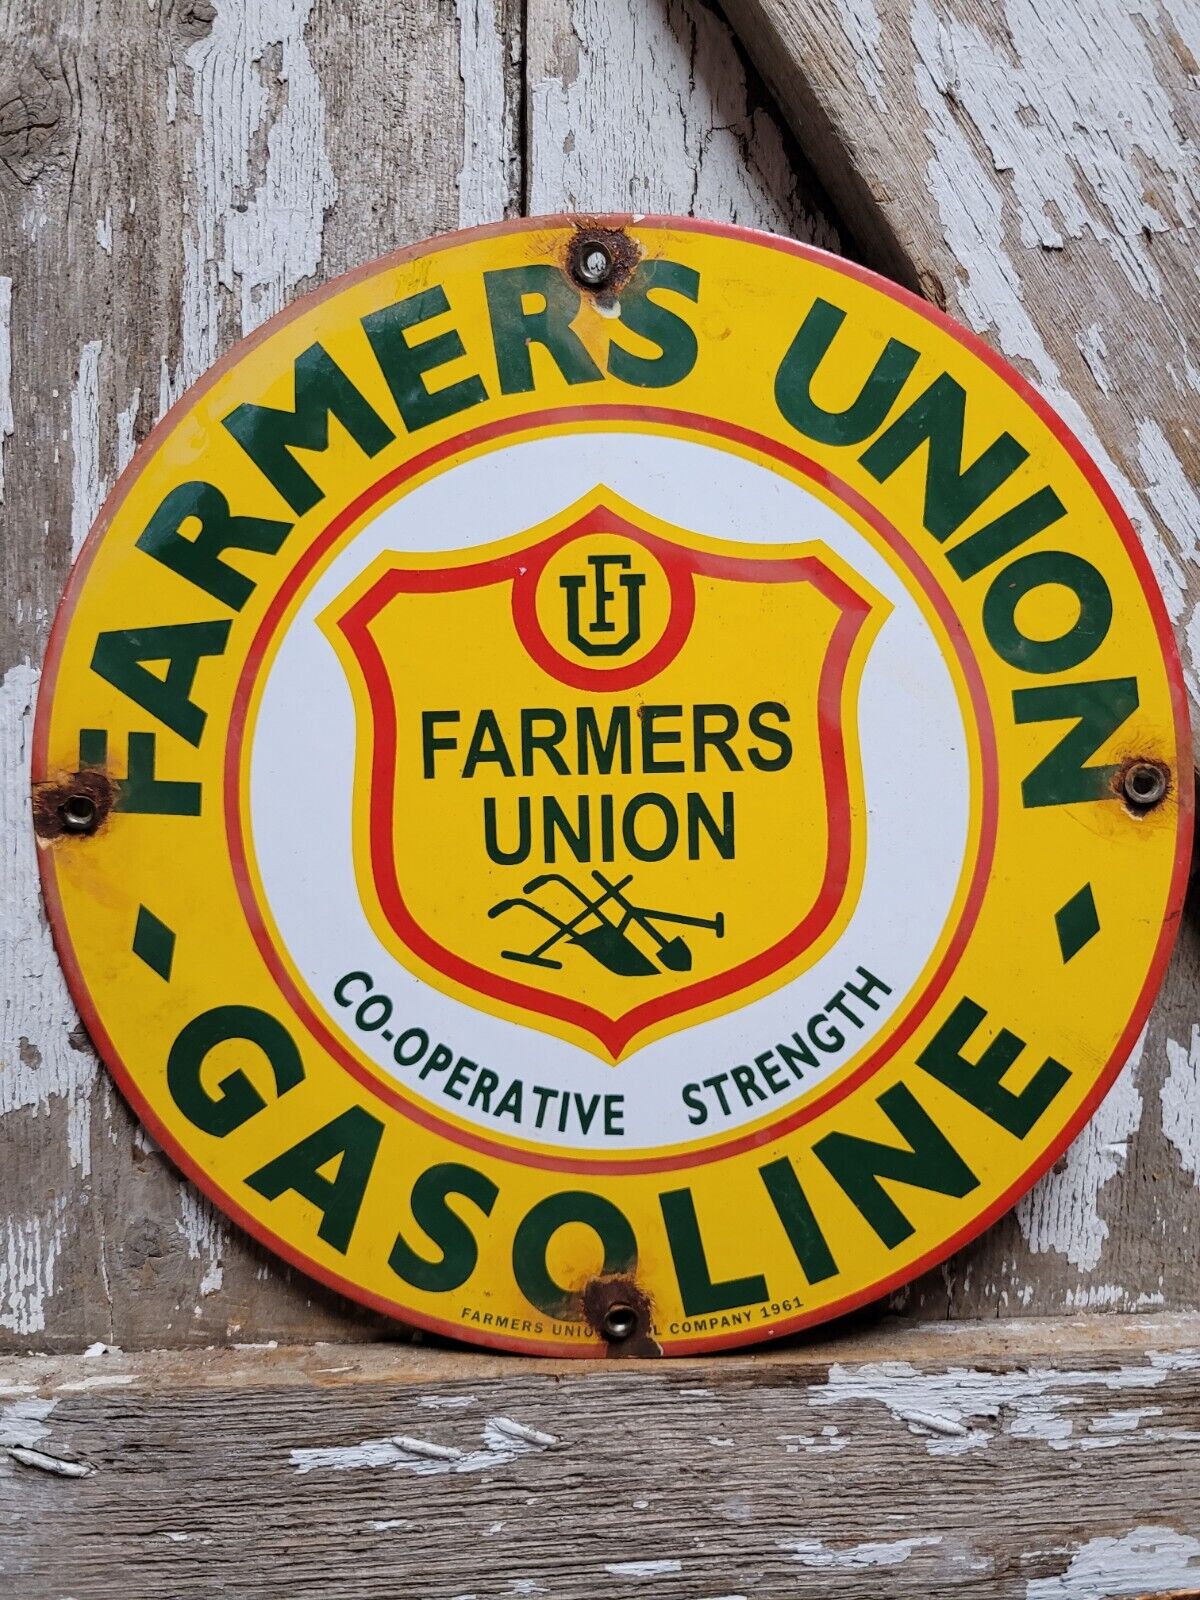 VINTAGE OLD 1961 FARMERS UNION GASOLINE PORCELAIN SIGN CO-OPERATIVE STRENGTH OIL